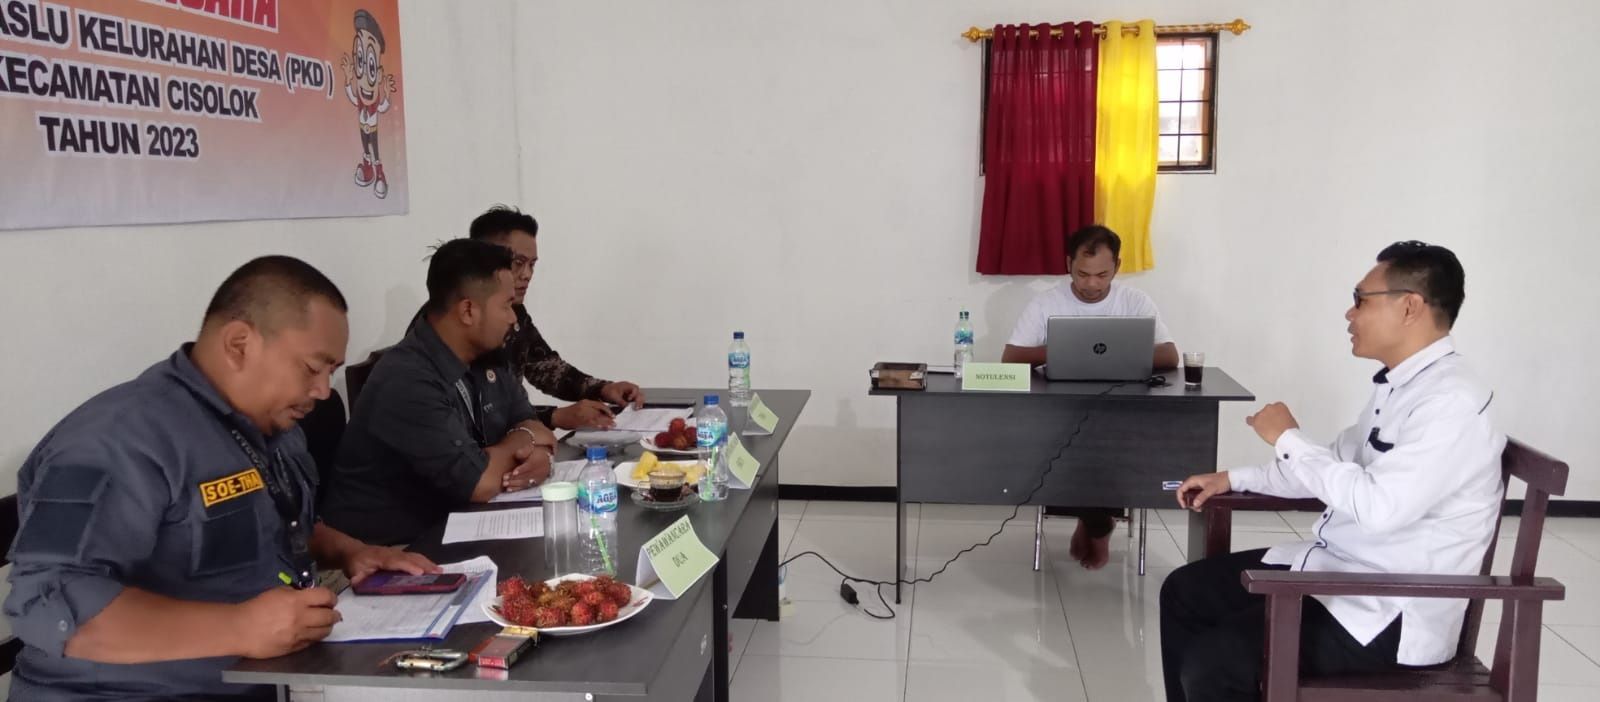 Perekrutan Calon Panwaslu Kelurahan Desa (PKD) Kecamatan Cisolok Kabupaten Sukabumi Provinsi Jawa Barat